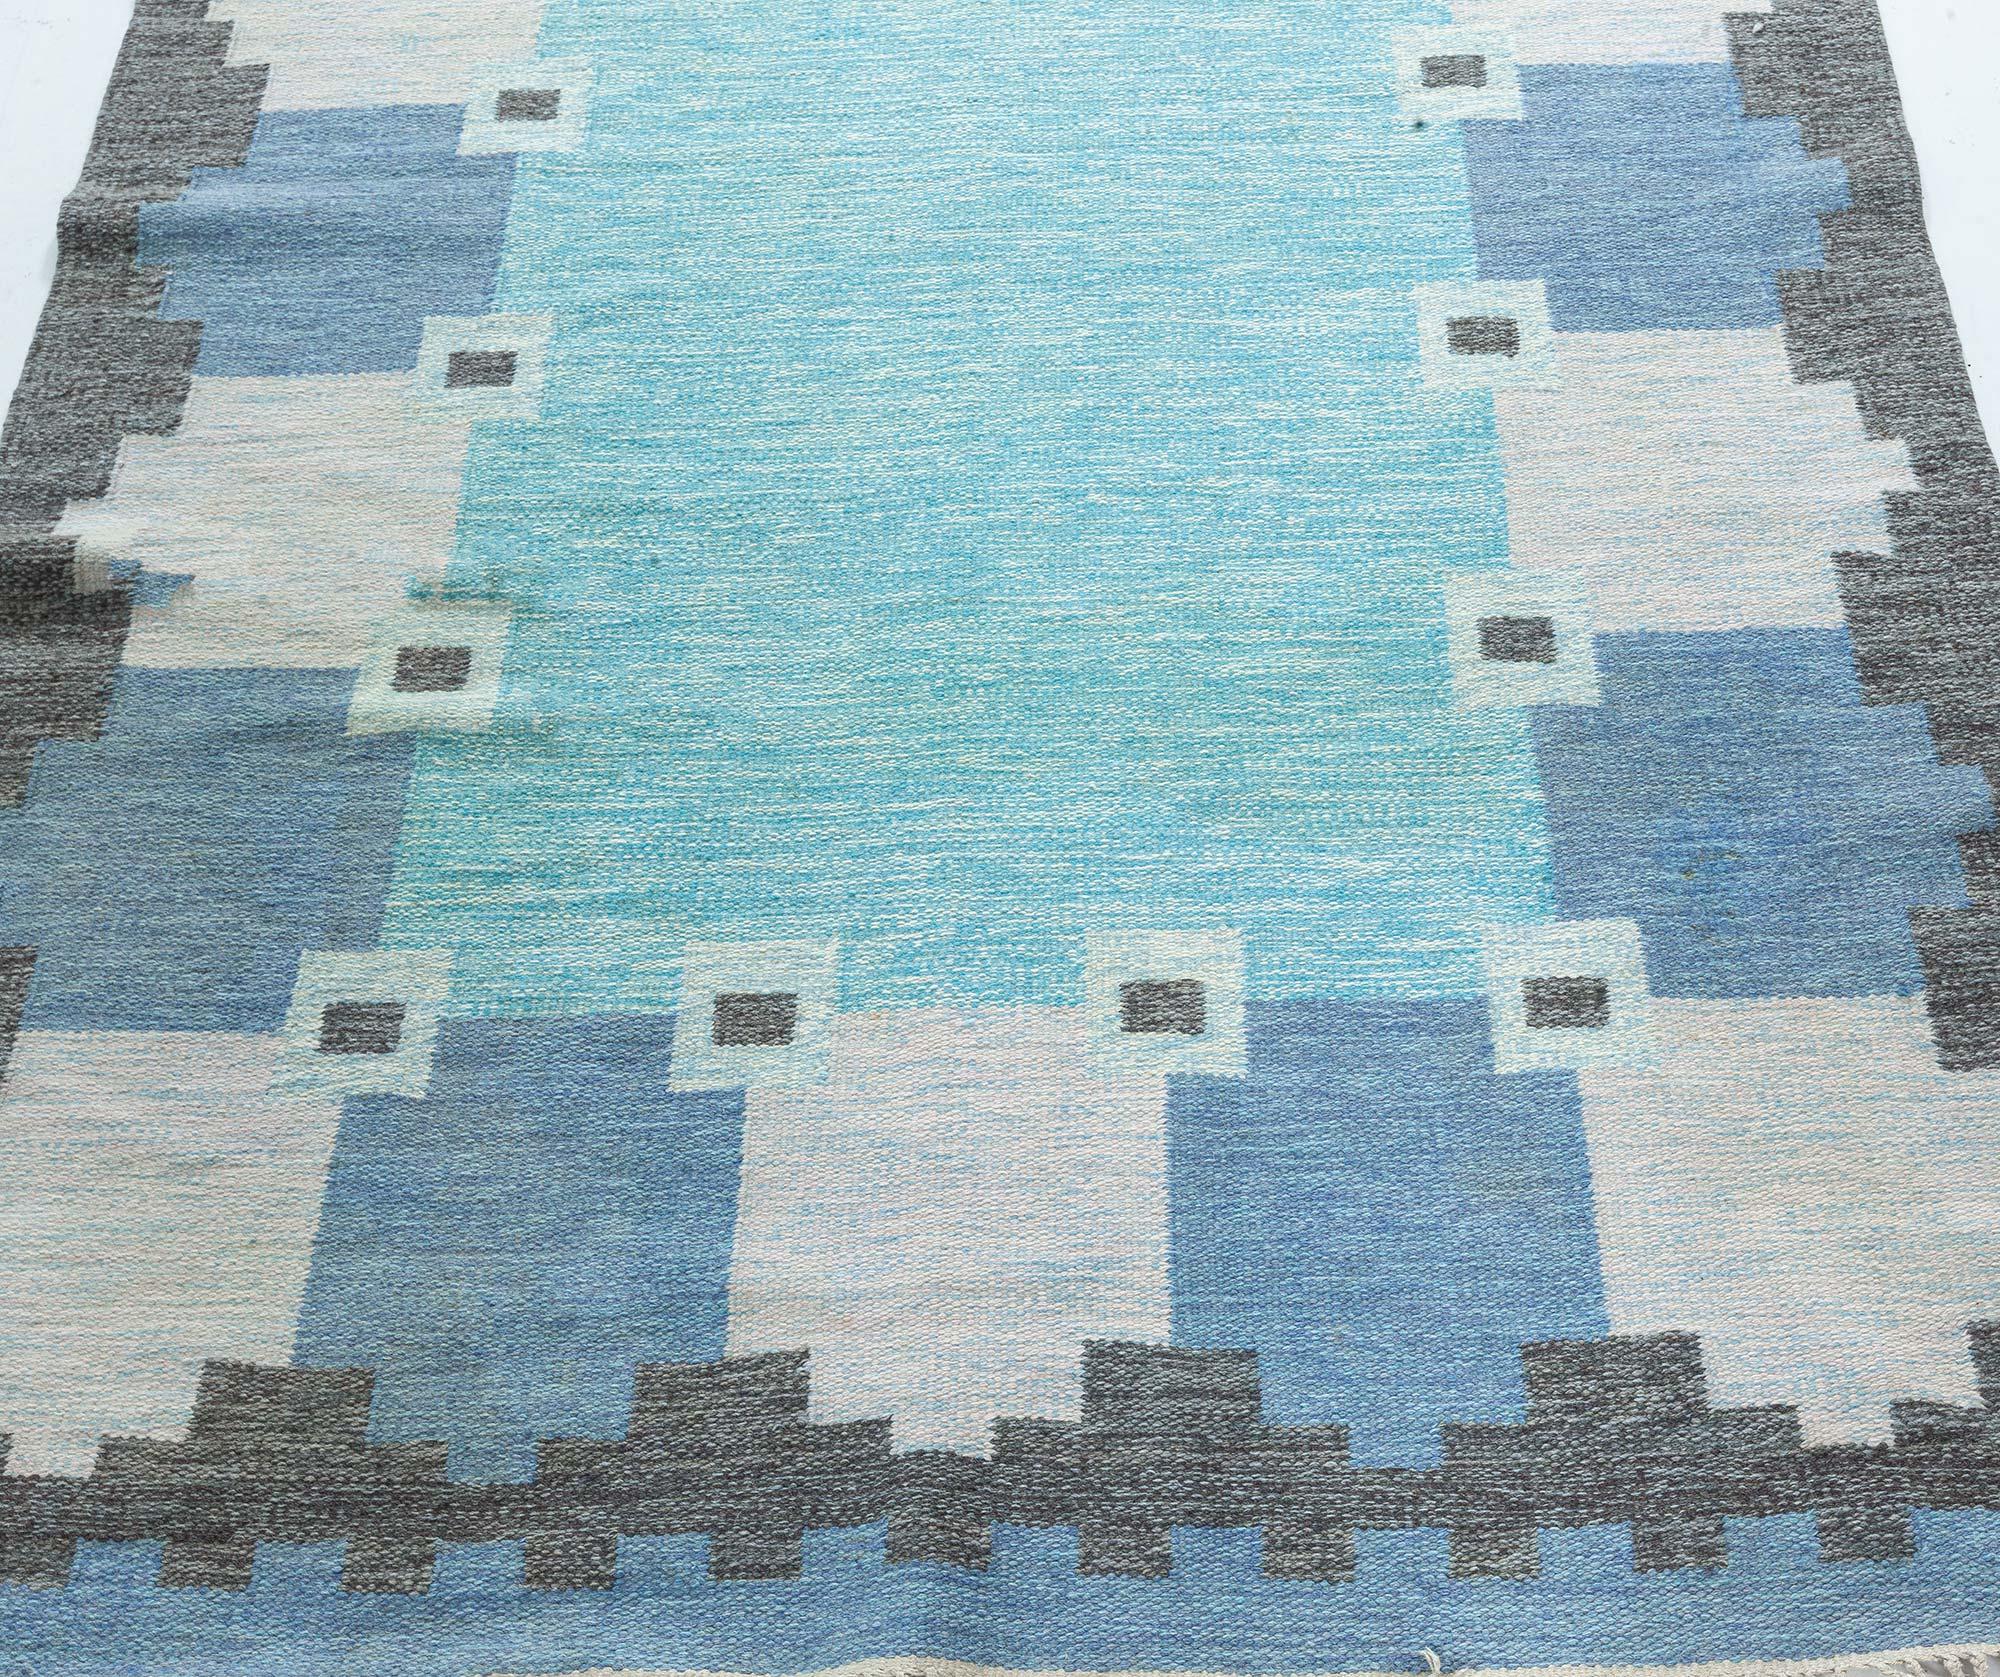 Vintage Swedish blue flat woven rug by Ingegerd Silow
Size: 5'2